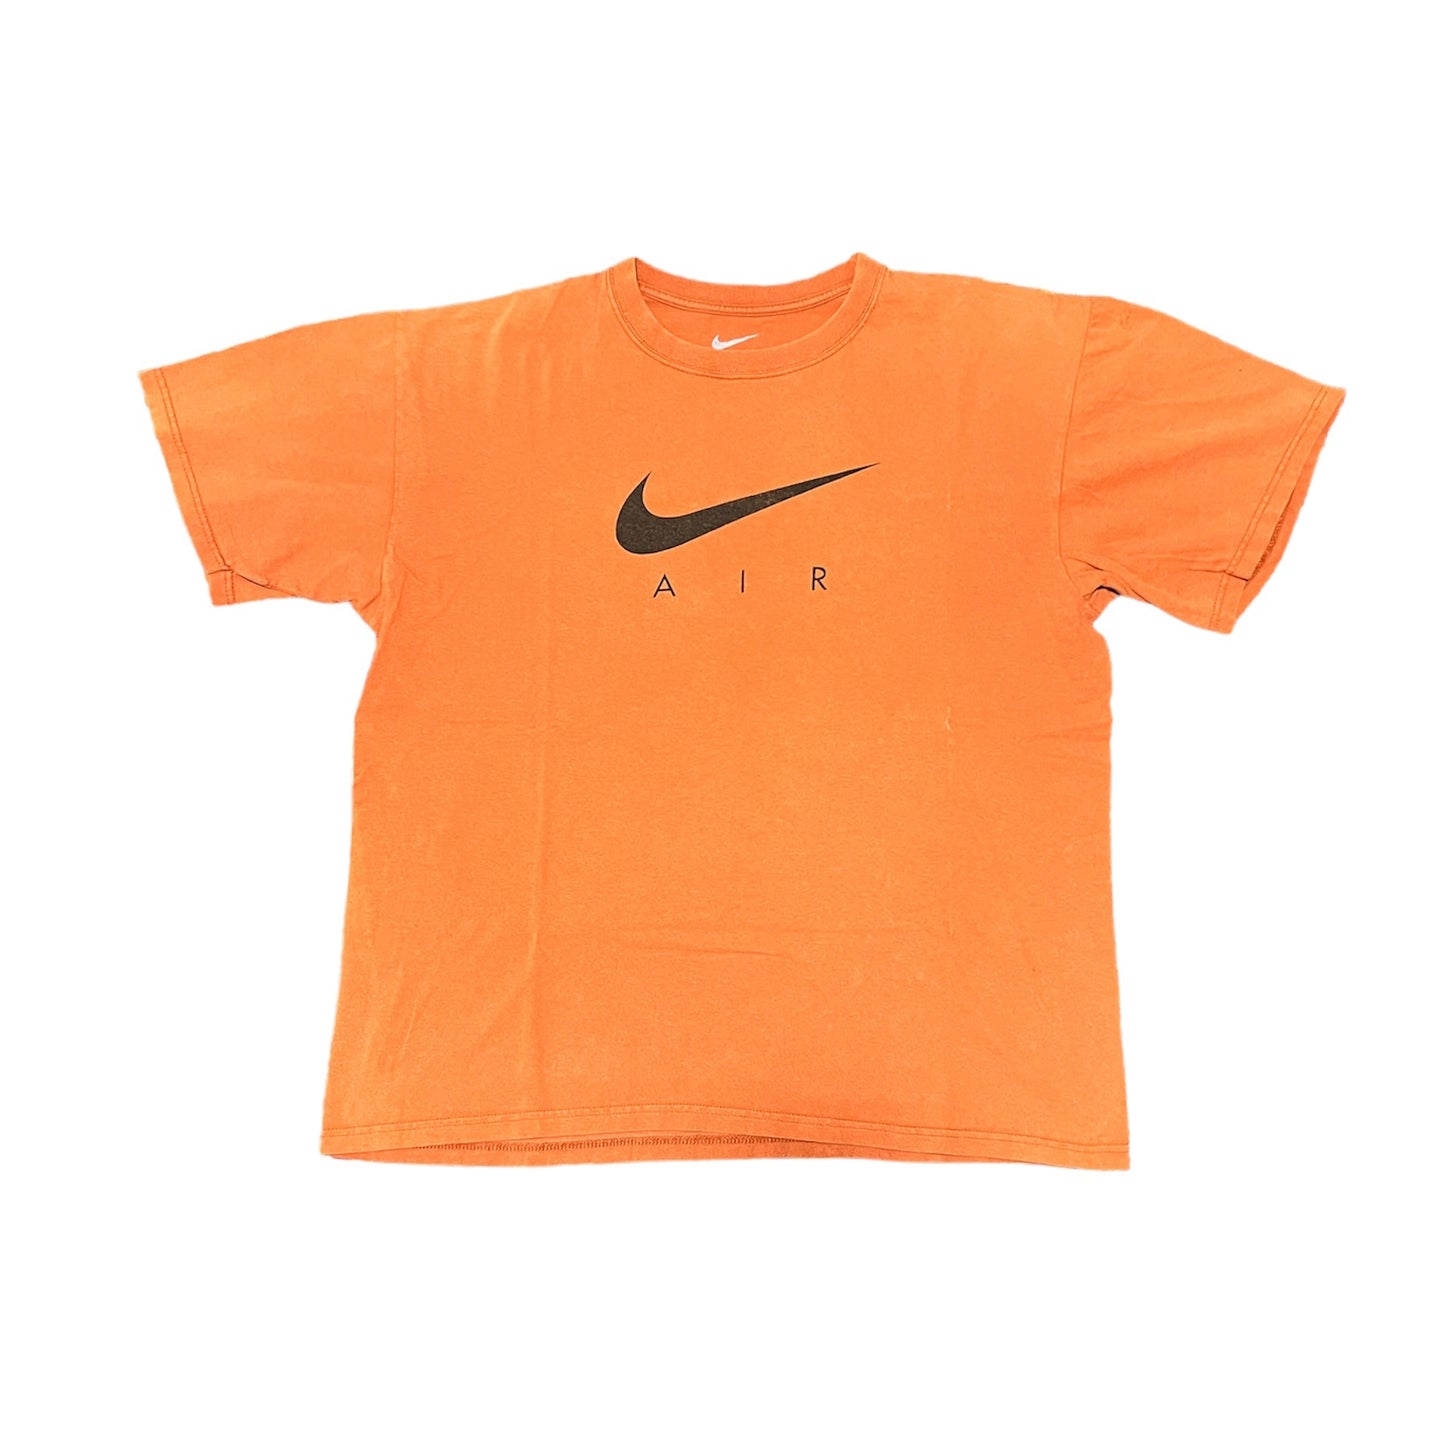 Nike Air T-Shirt Size X-Large